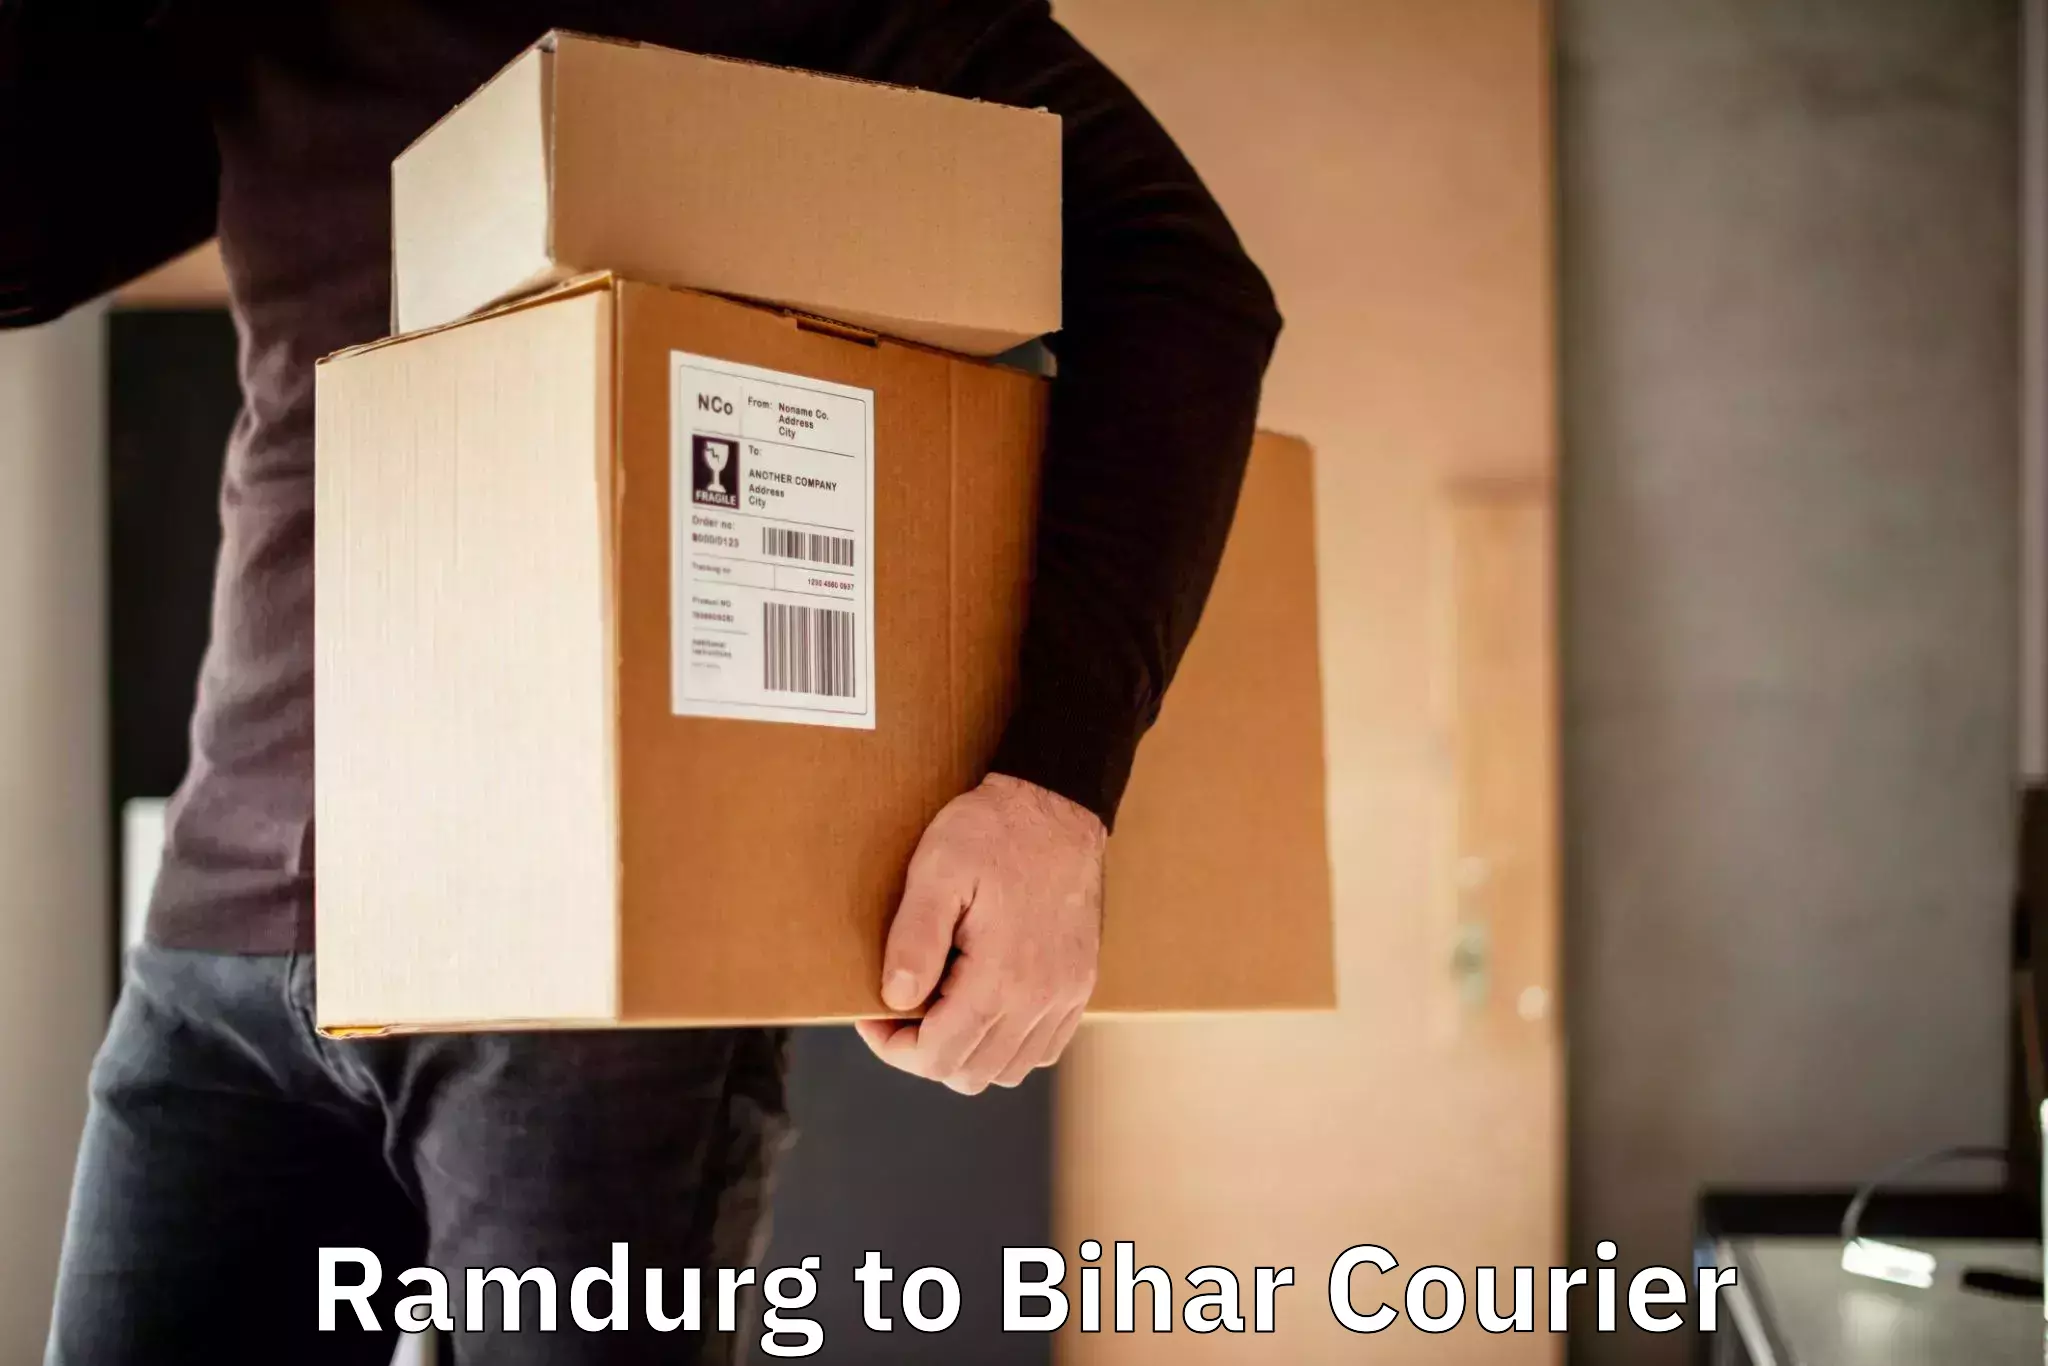 Courier service innovation Ramdurg to Sheonar